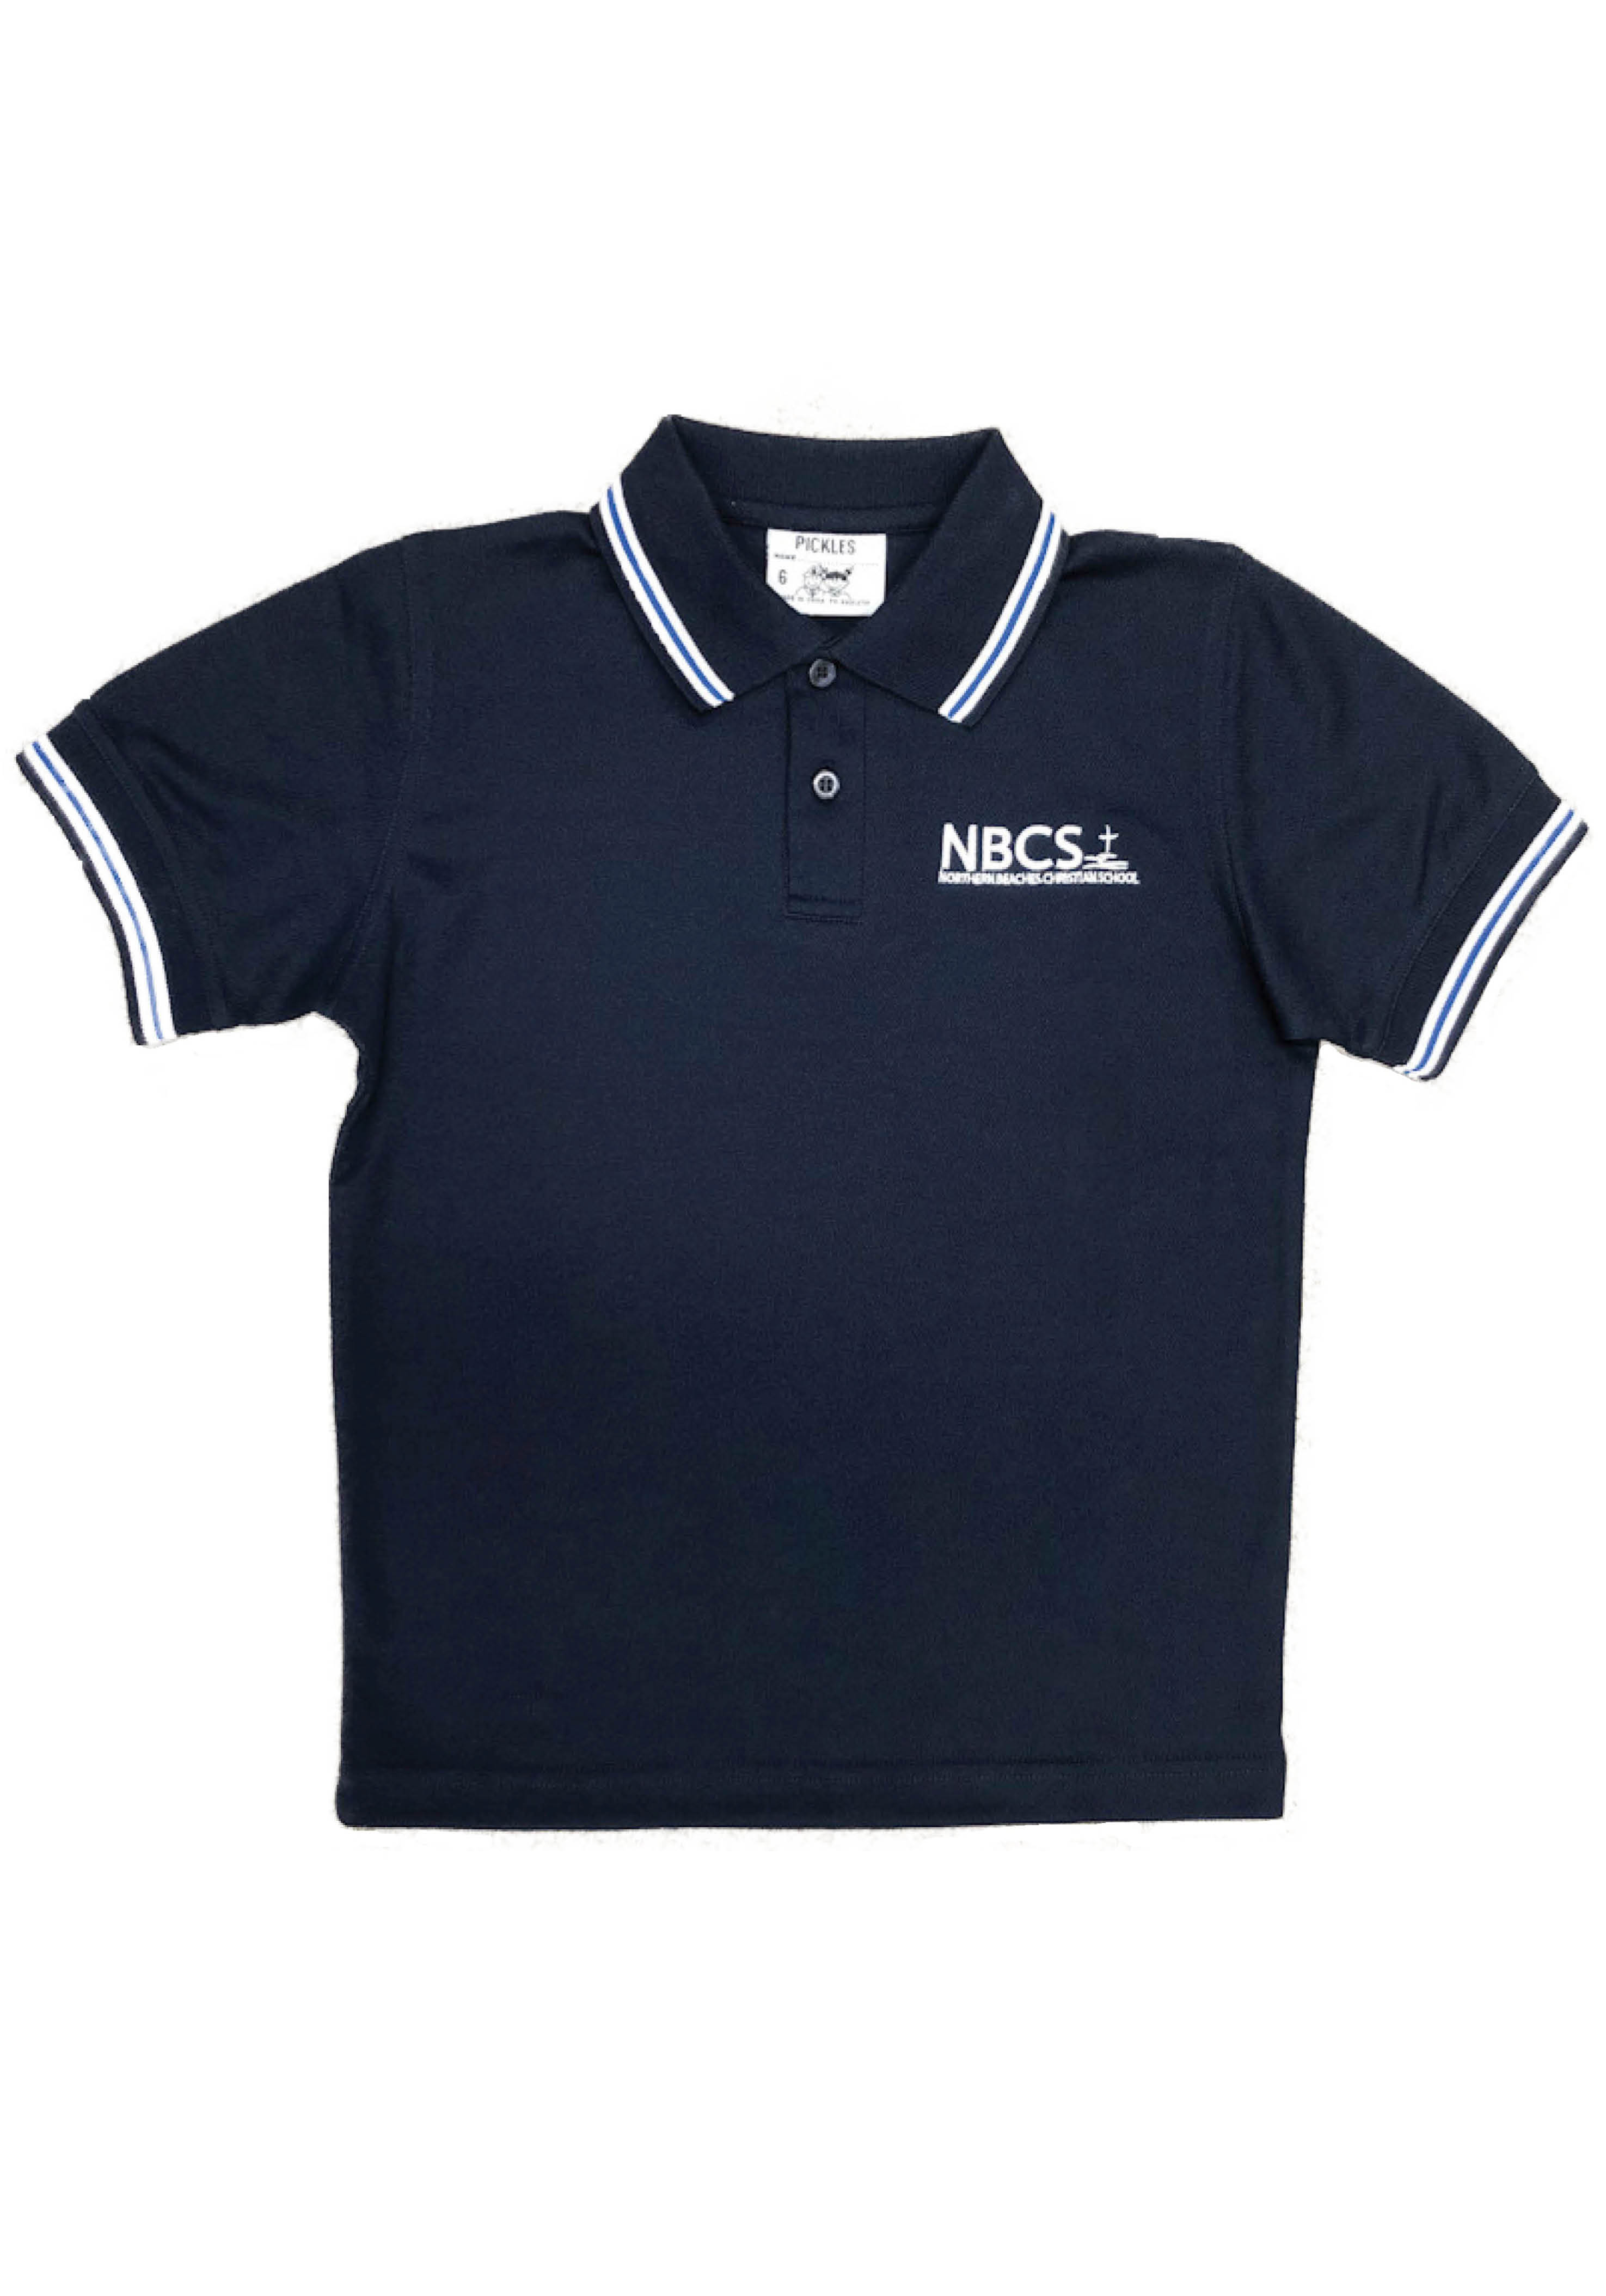 Nbcs Unisex Sports Polo Shirt | Shop at Pickles Schoolwear | School ...